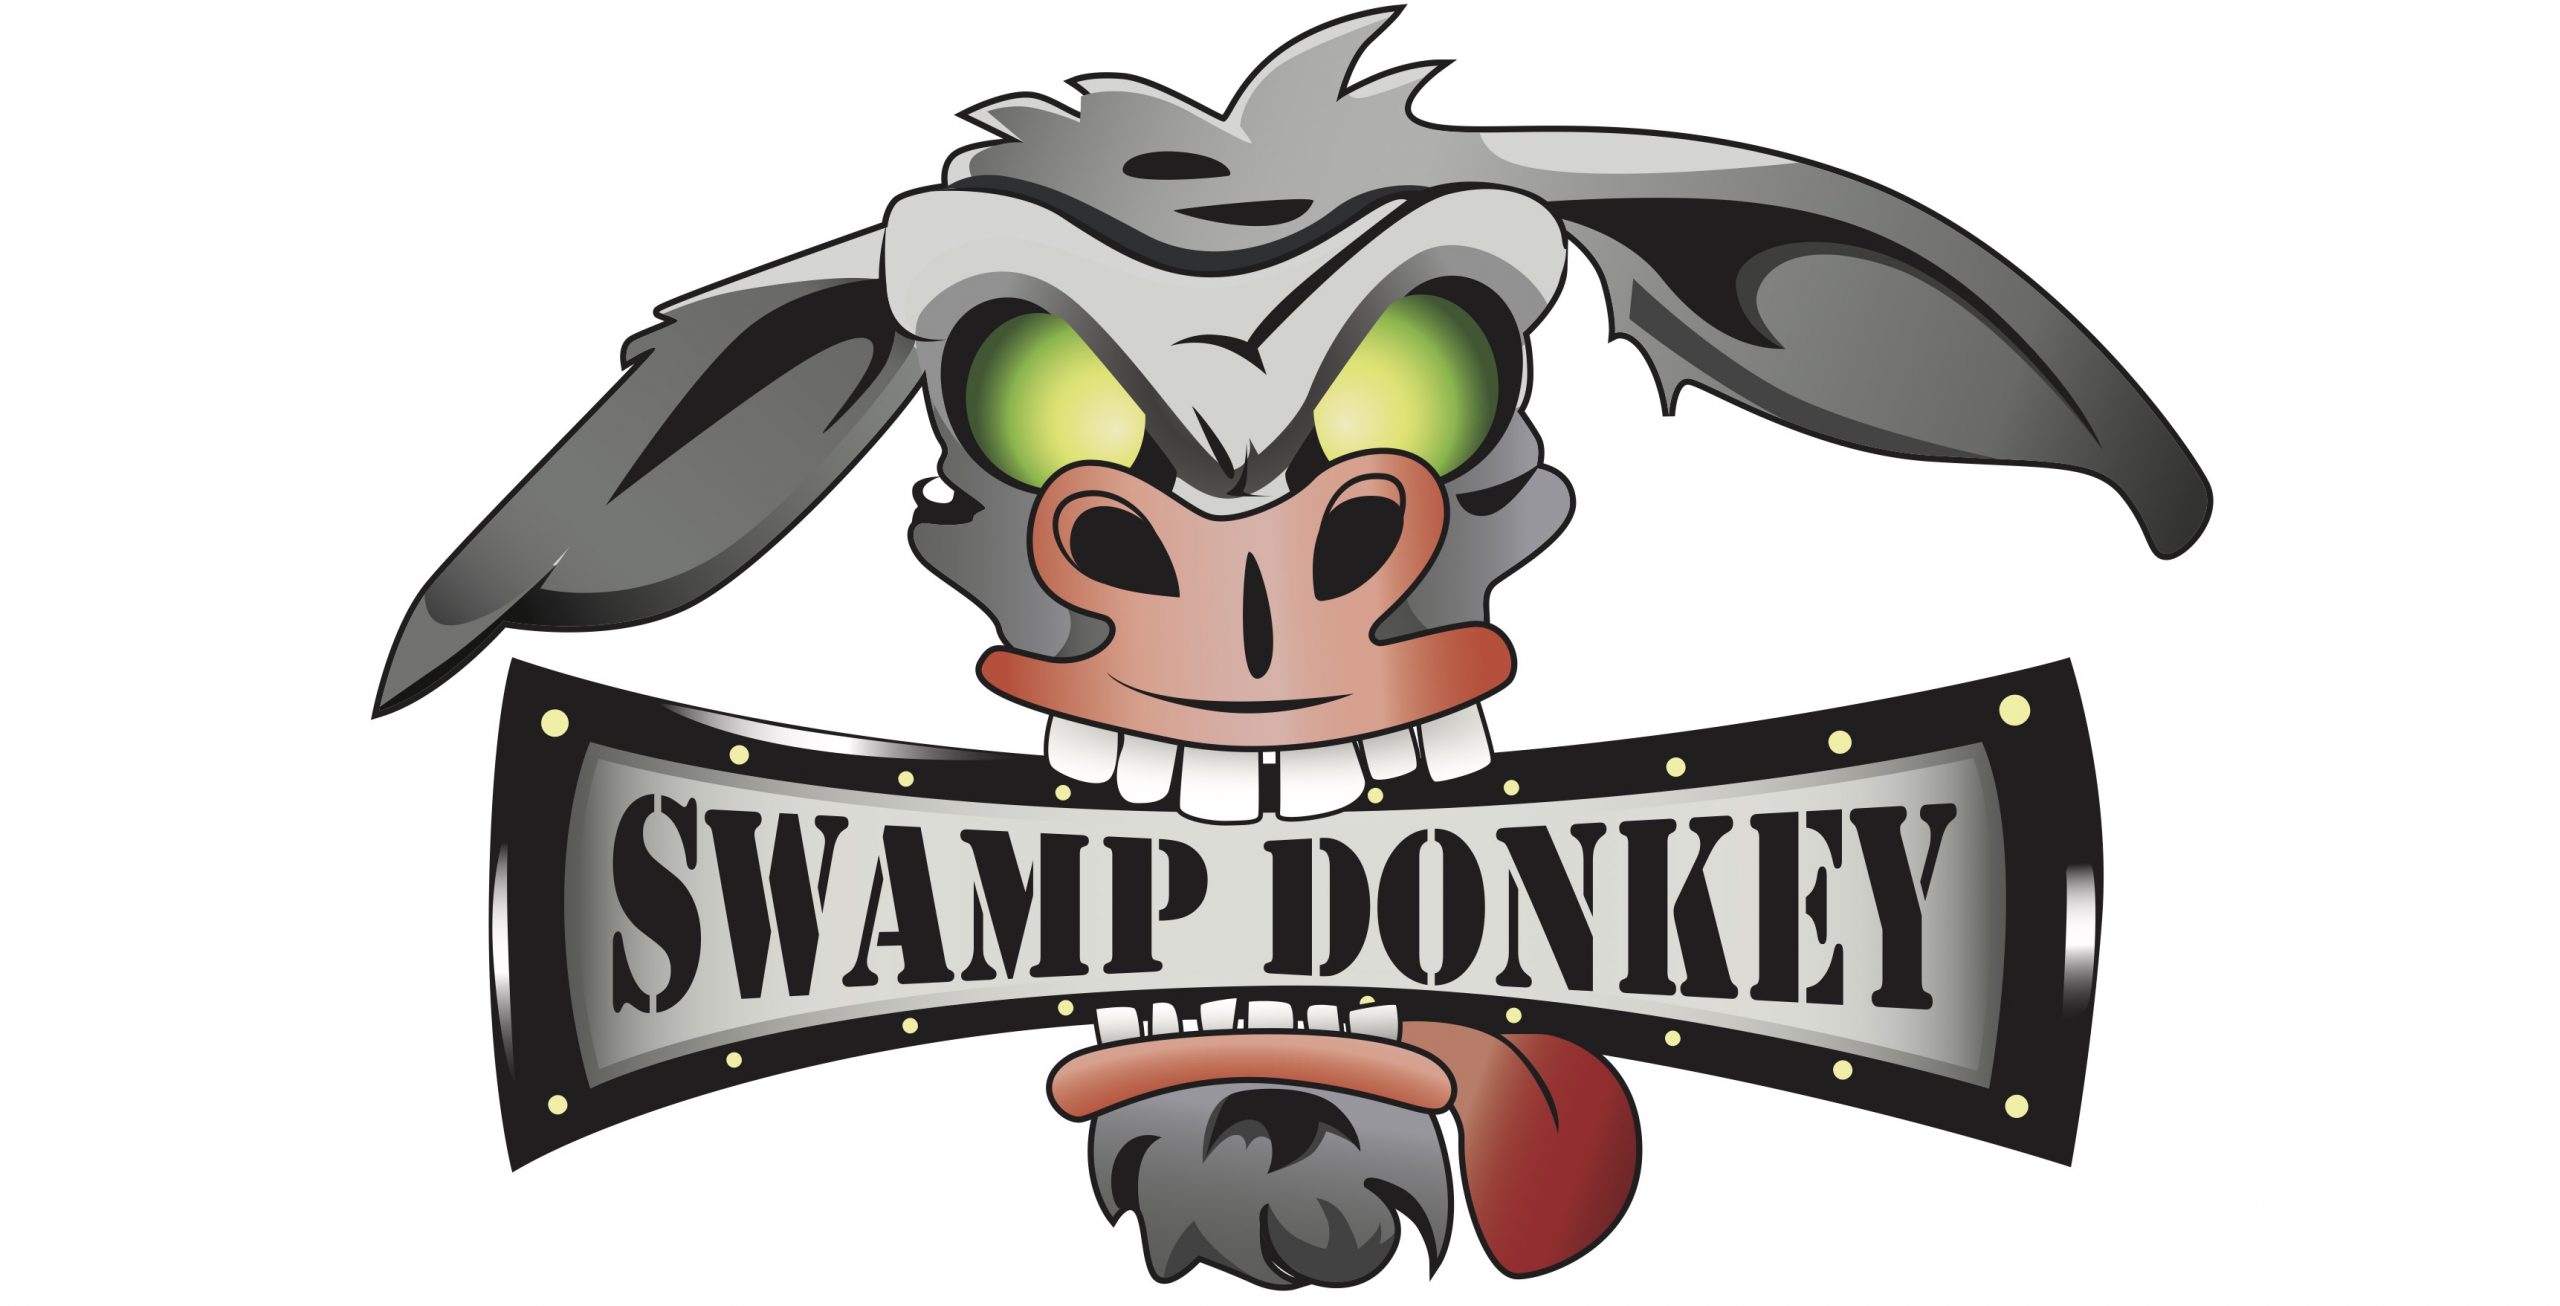 Swamp Donkey at The Flying X